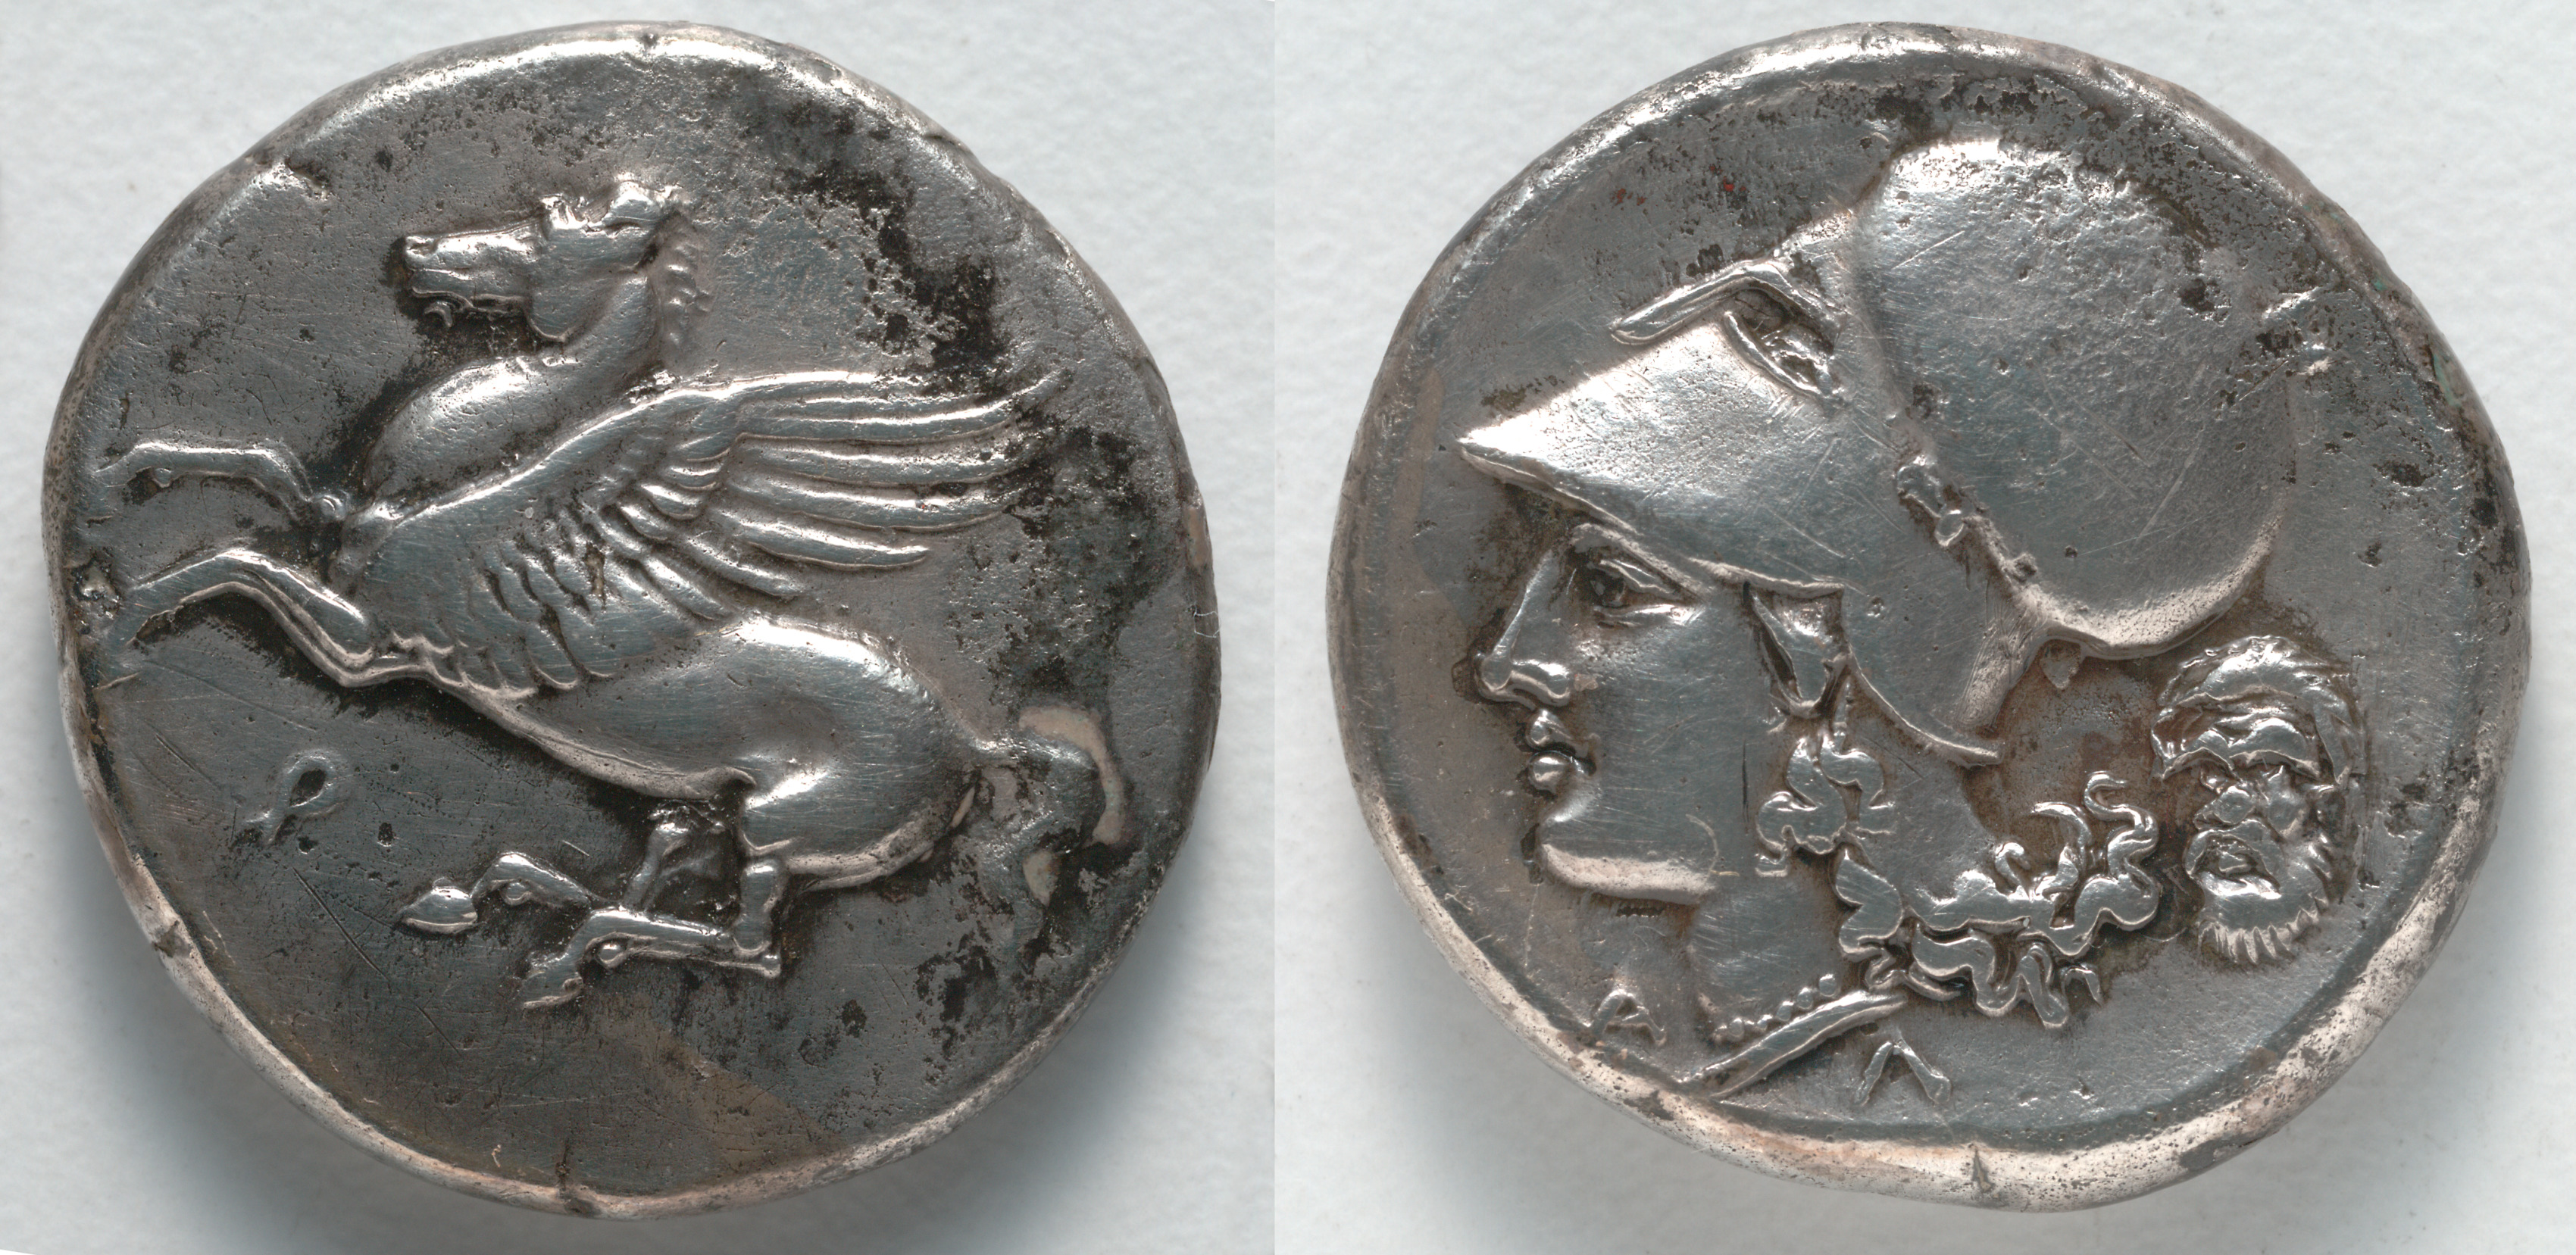 Stater: Pegasos (obverse); Head of Athena (reverse)